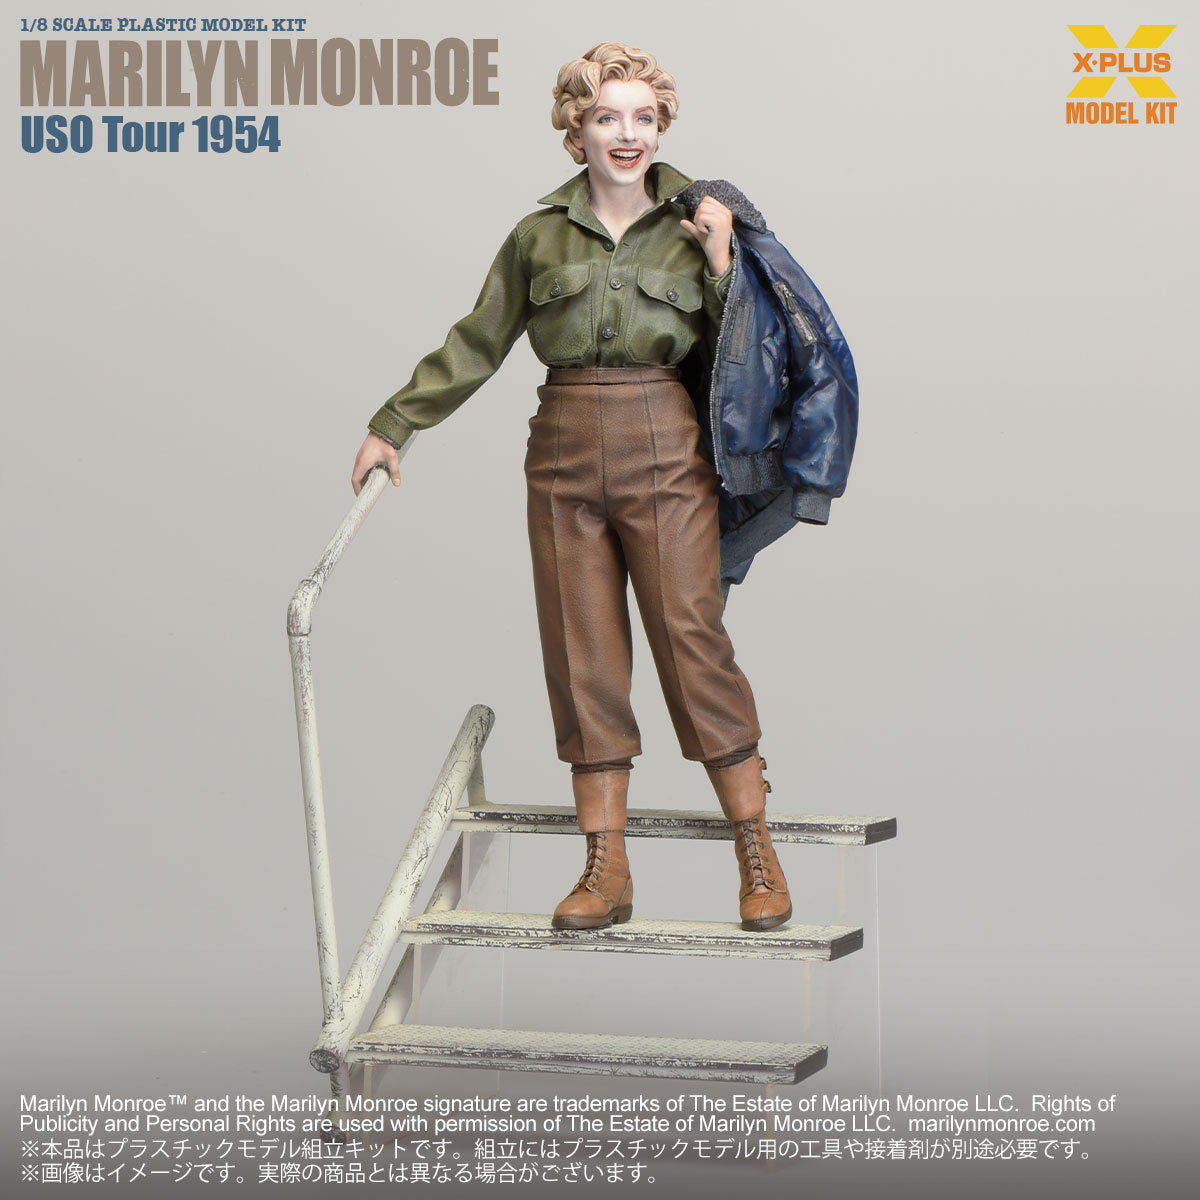 X-Plus - Marilyn Monroe, USO Tour 1954 Model Kit (1/8 Scale) - Marvelous Toys